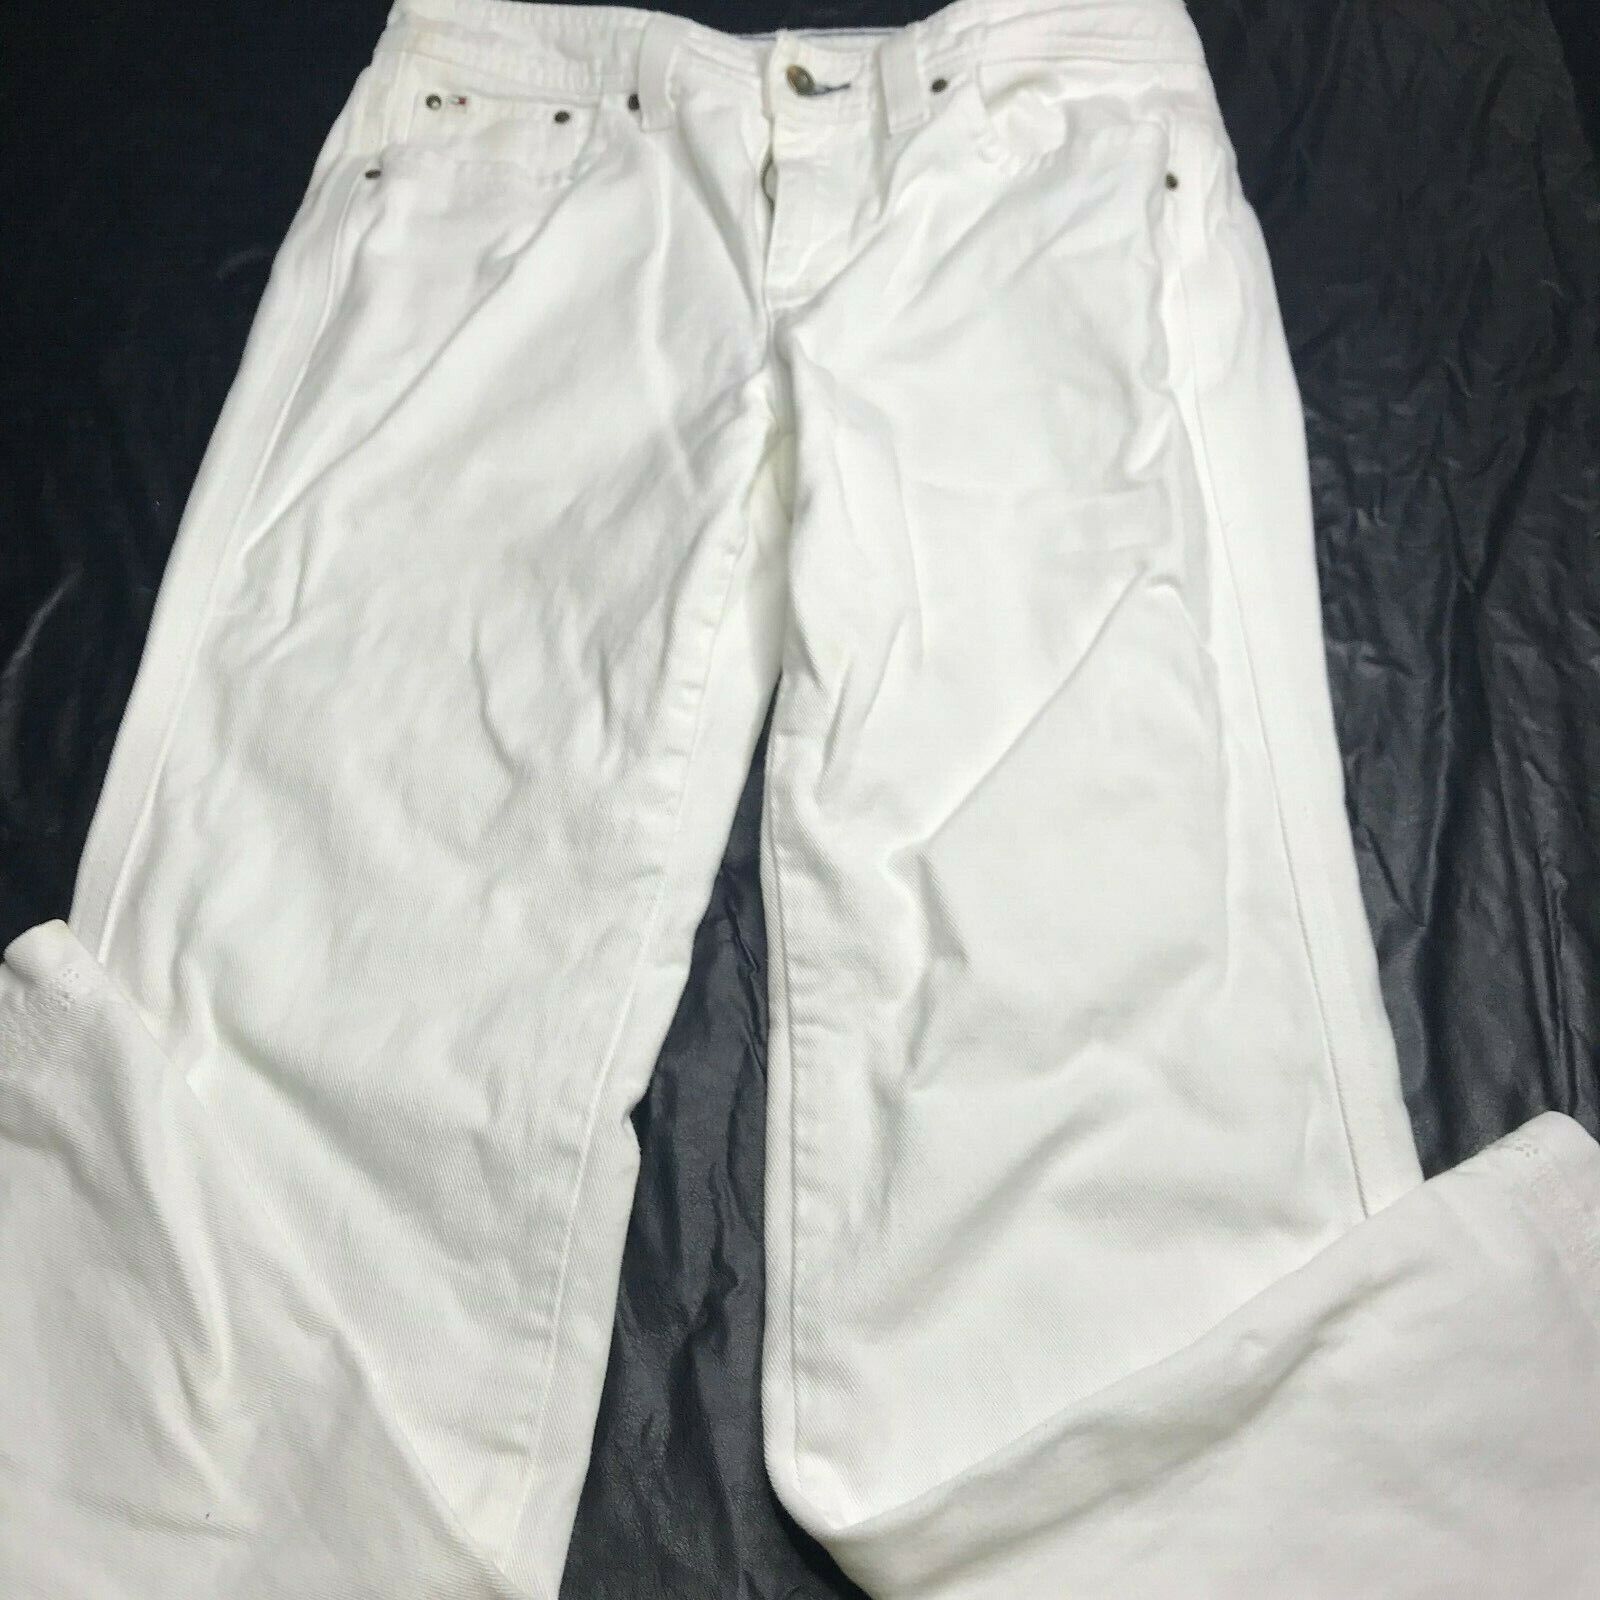 Tommy Hilfiger white jeans size 8 - image 1